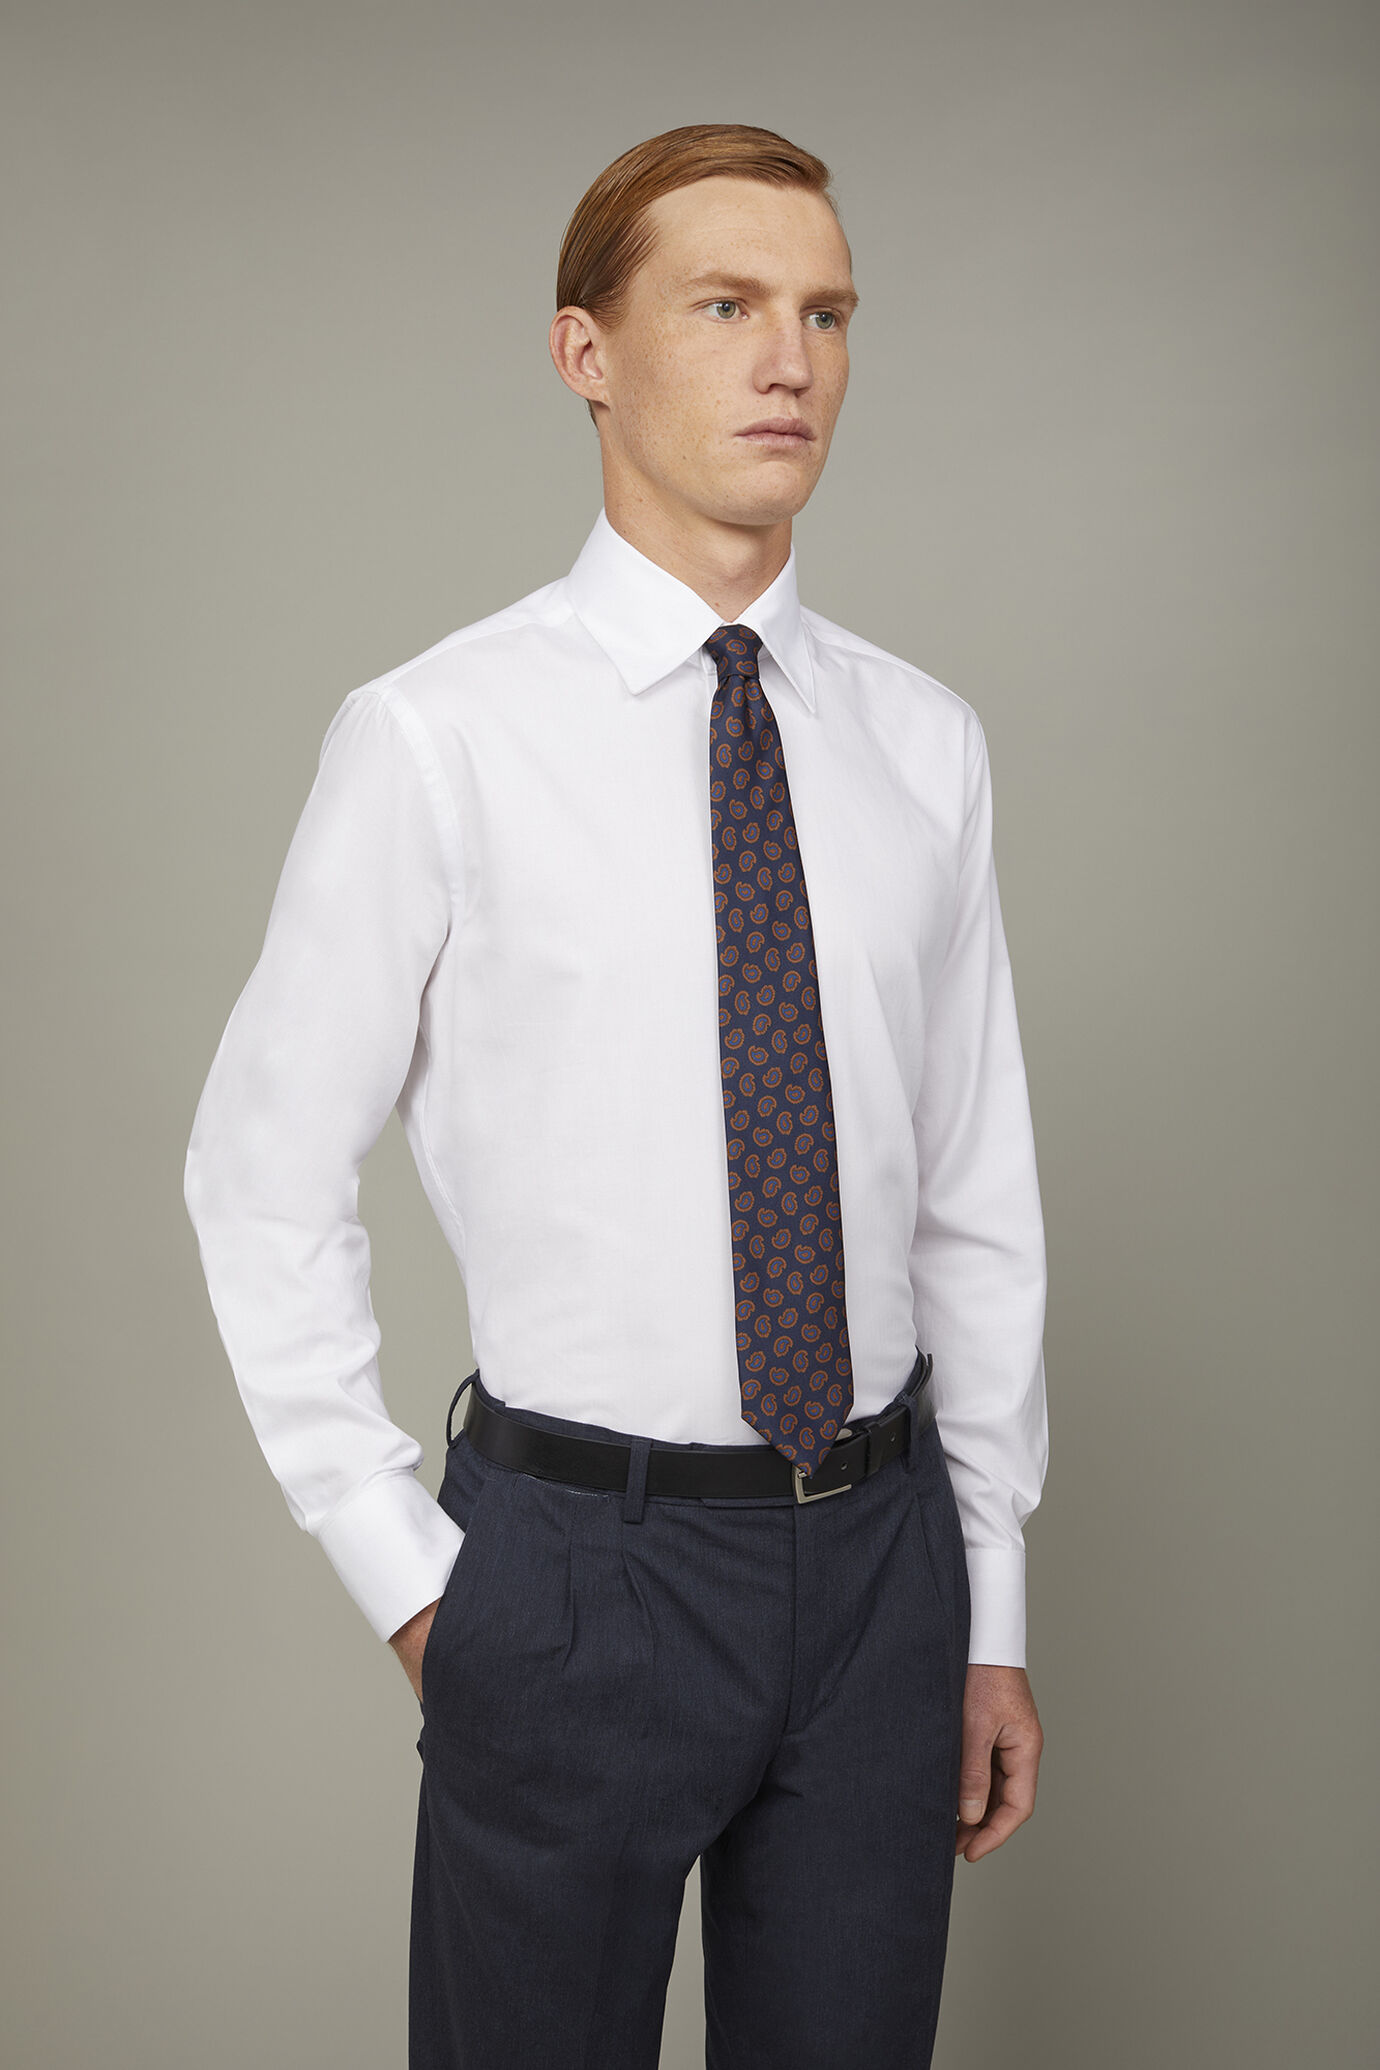 Men's shirt classic collar 100% cotton herringbone fabric plain regular fit image number 2